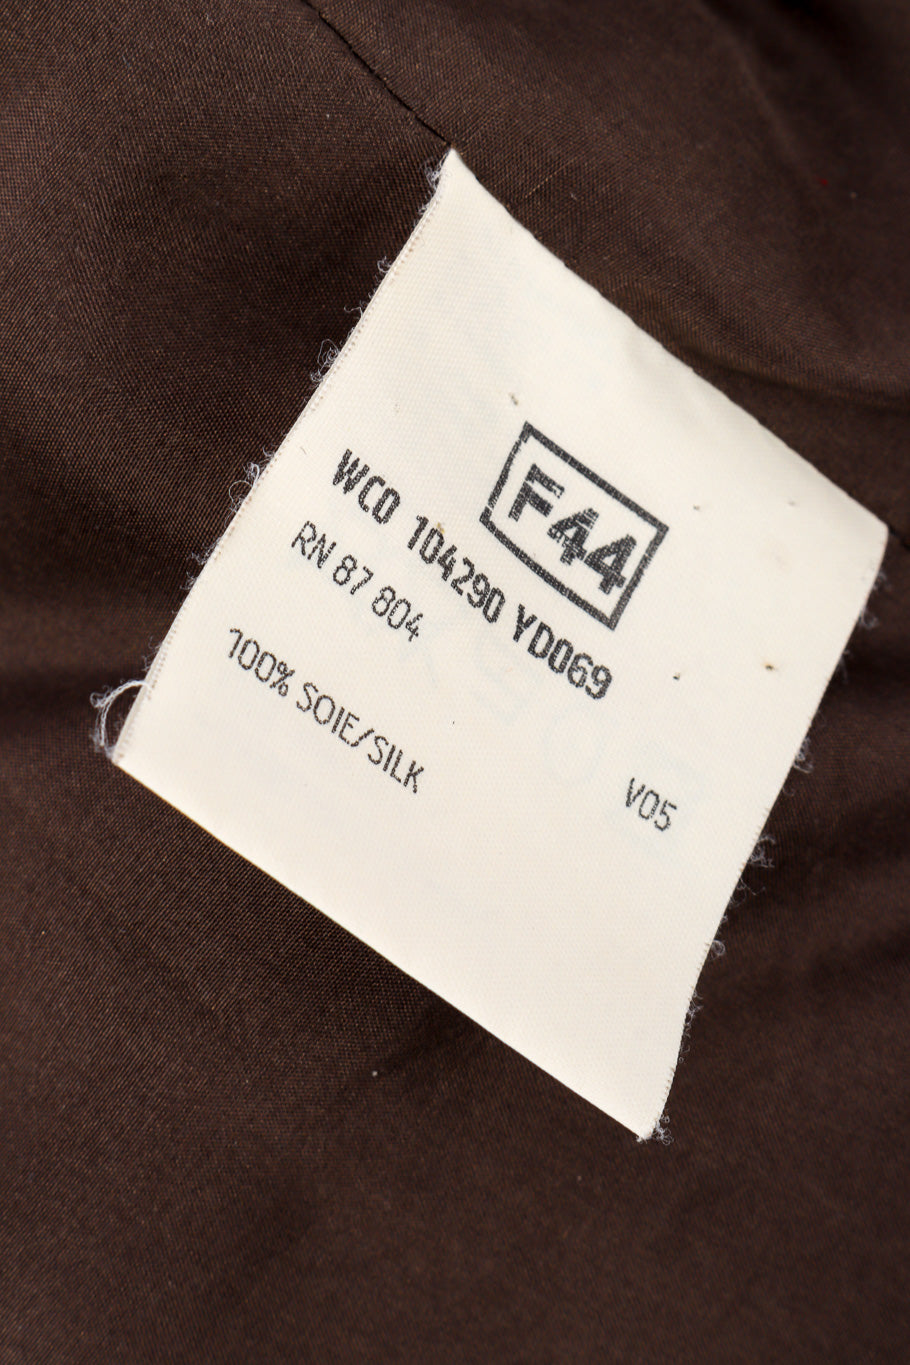 Silk velvet jacket by Yves Saint Laurent fabric tag front  @recessla